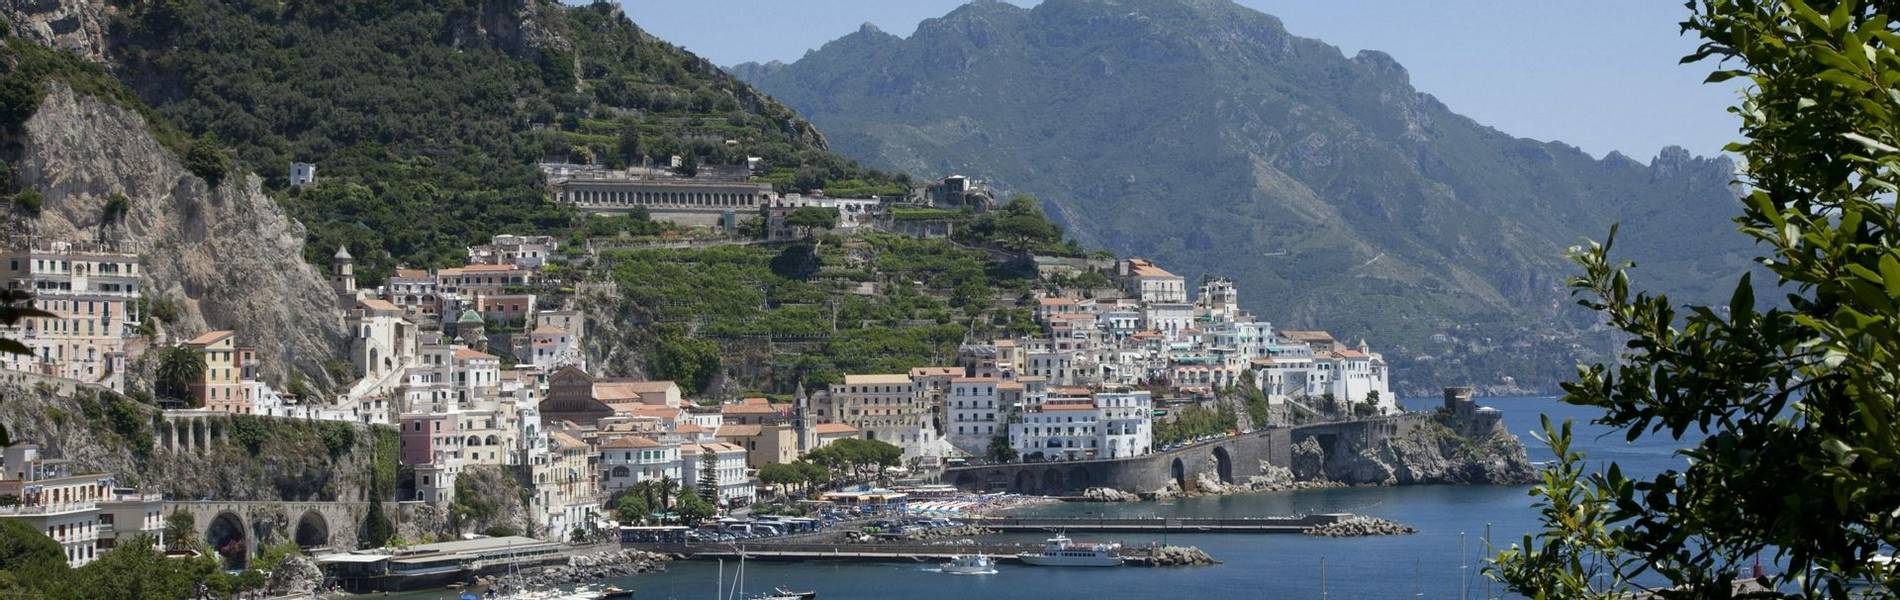 Miramalfi, Amalfi Coast, Italy (52).jpg